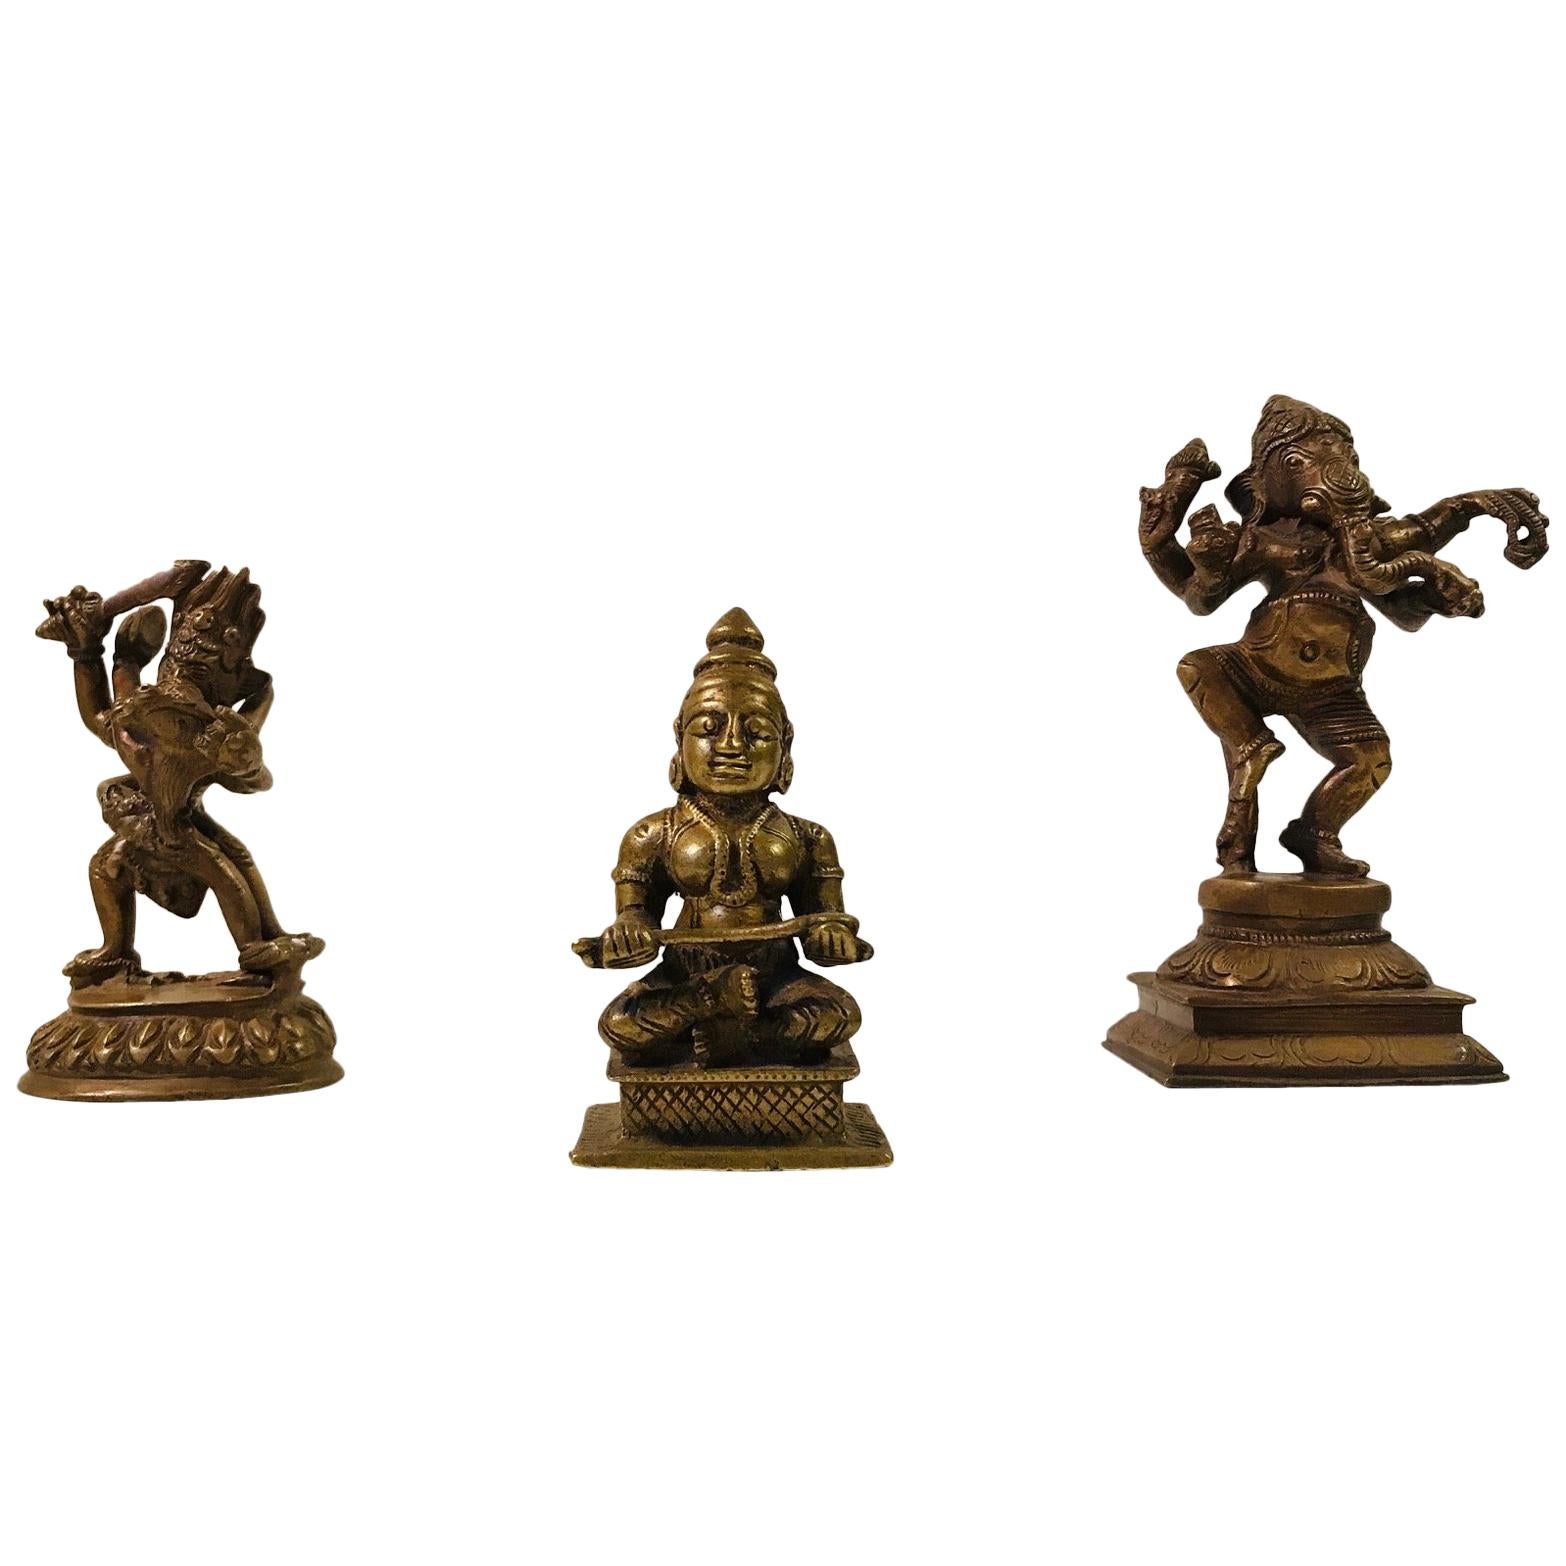 Trio of Antique Hindu God Figurines in Bronze, Maha Durga, Shiva and Ganesh